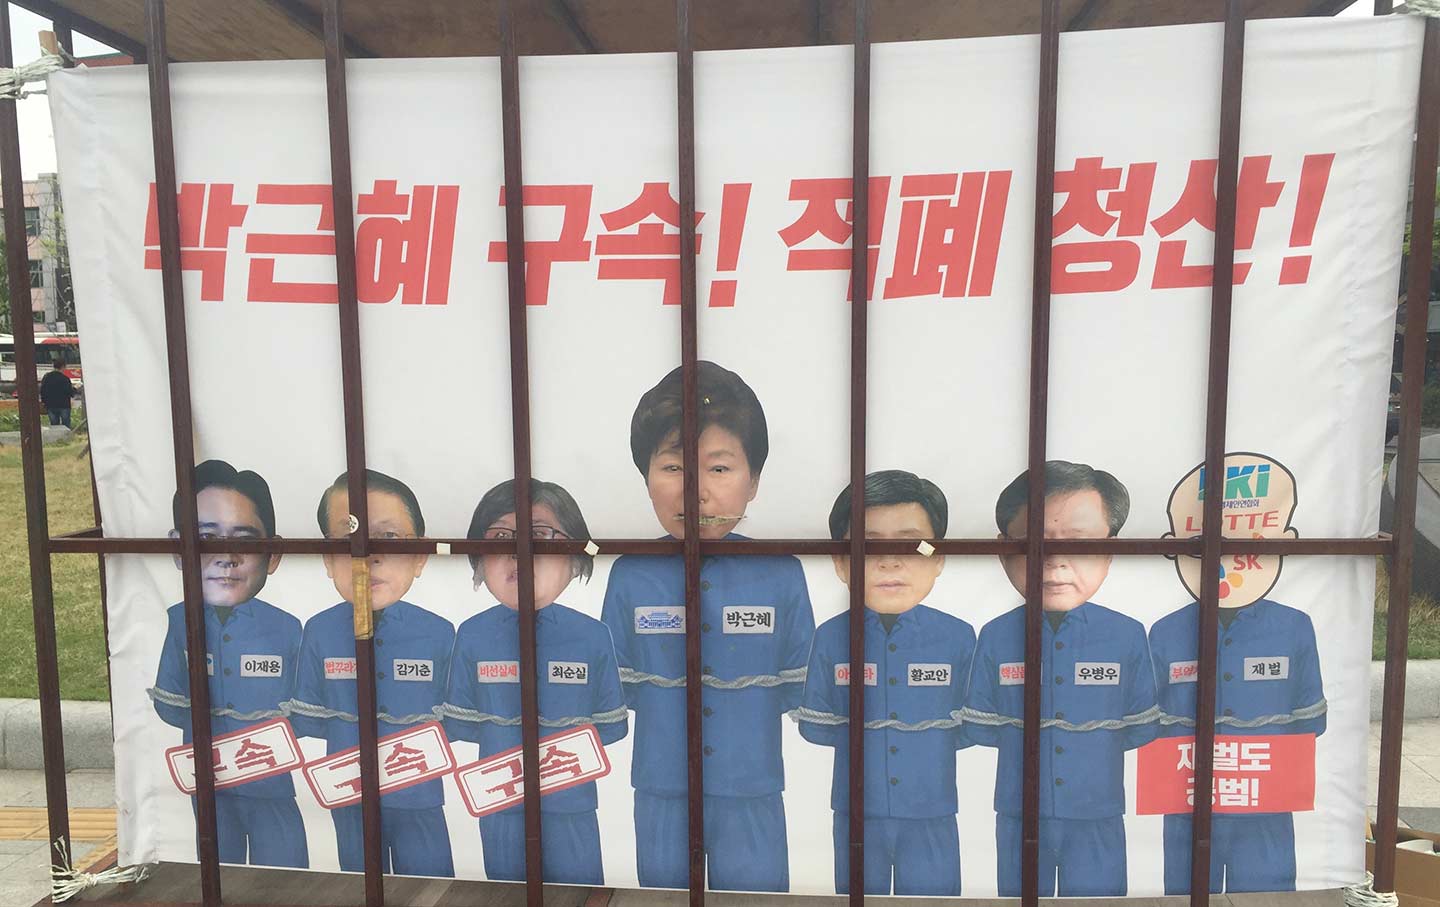 A sign in Gwangju calling for Park Geun-hye's imprisonment